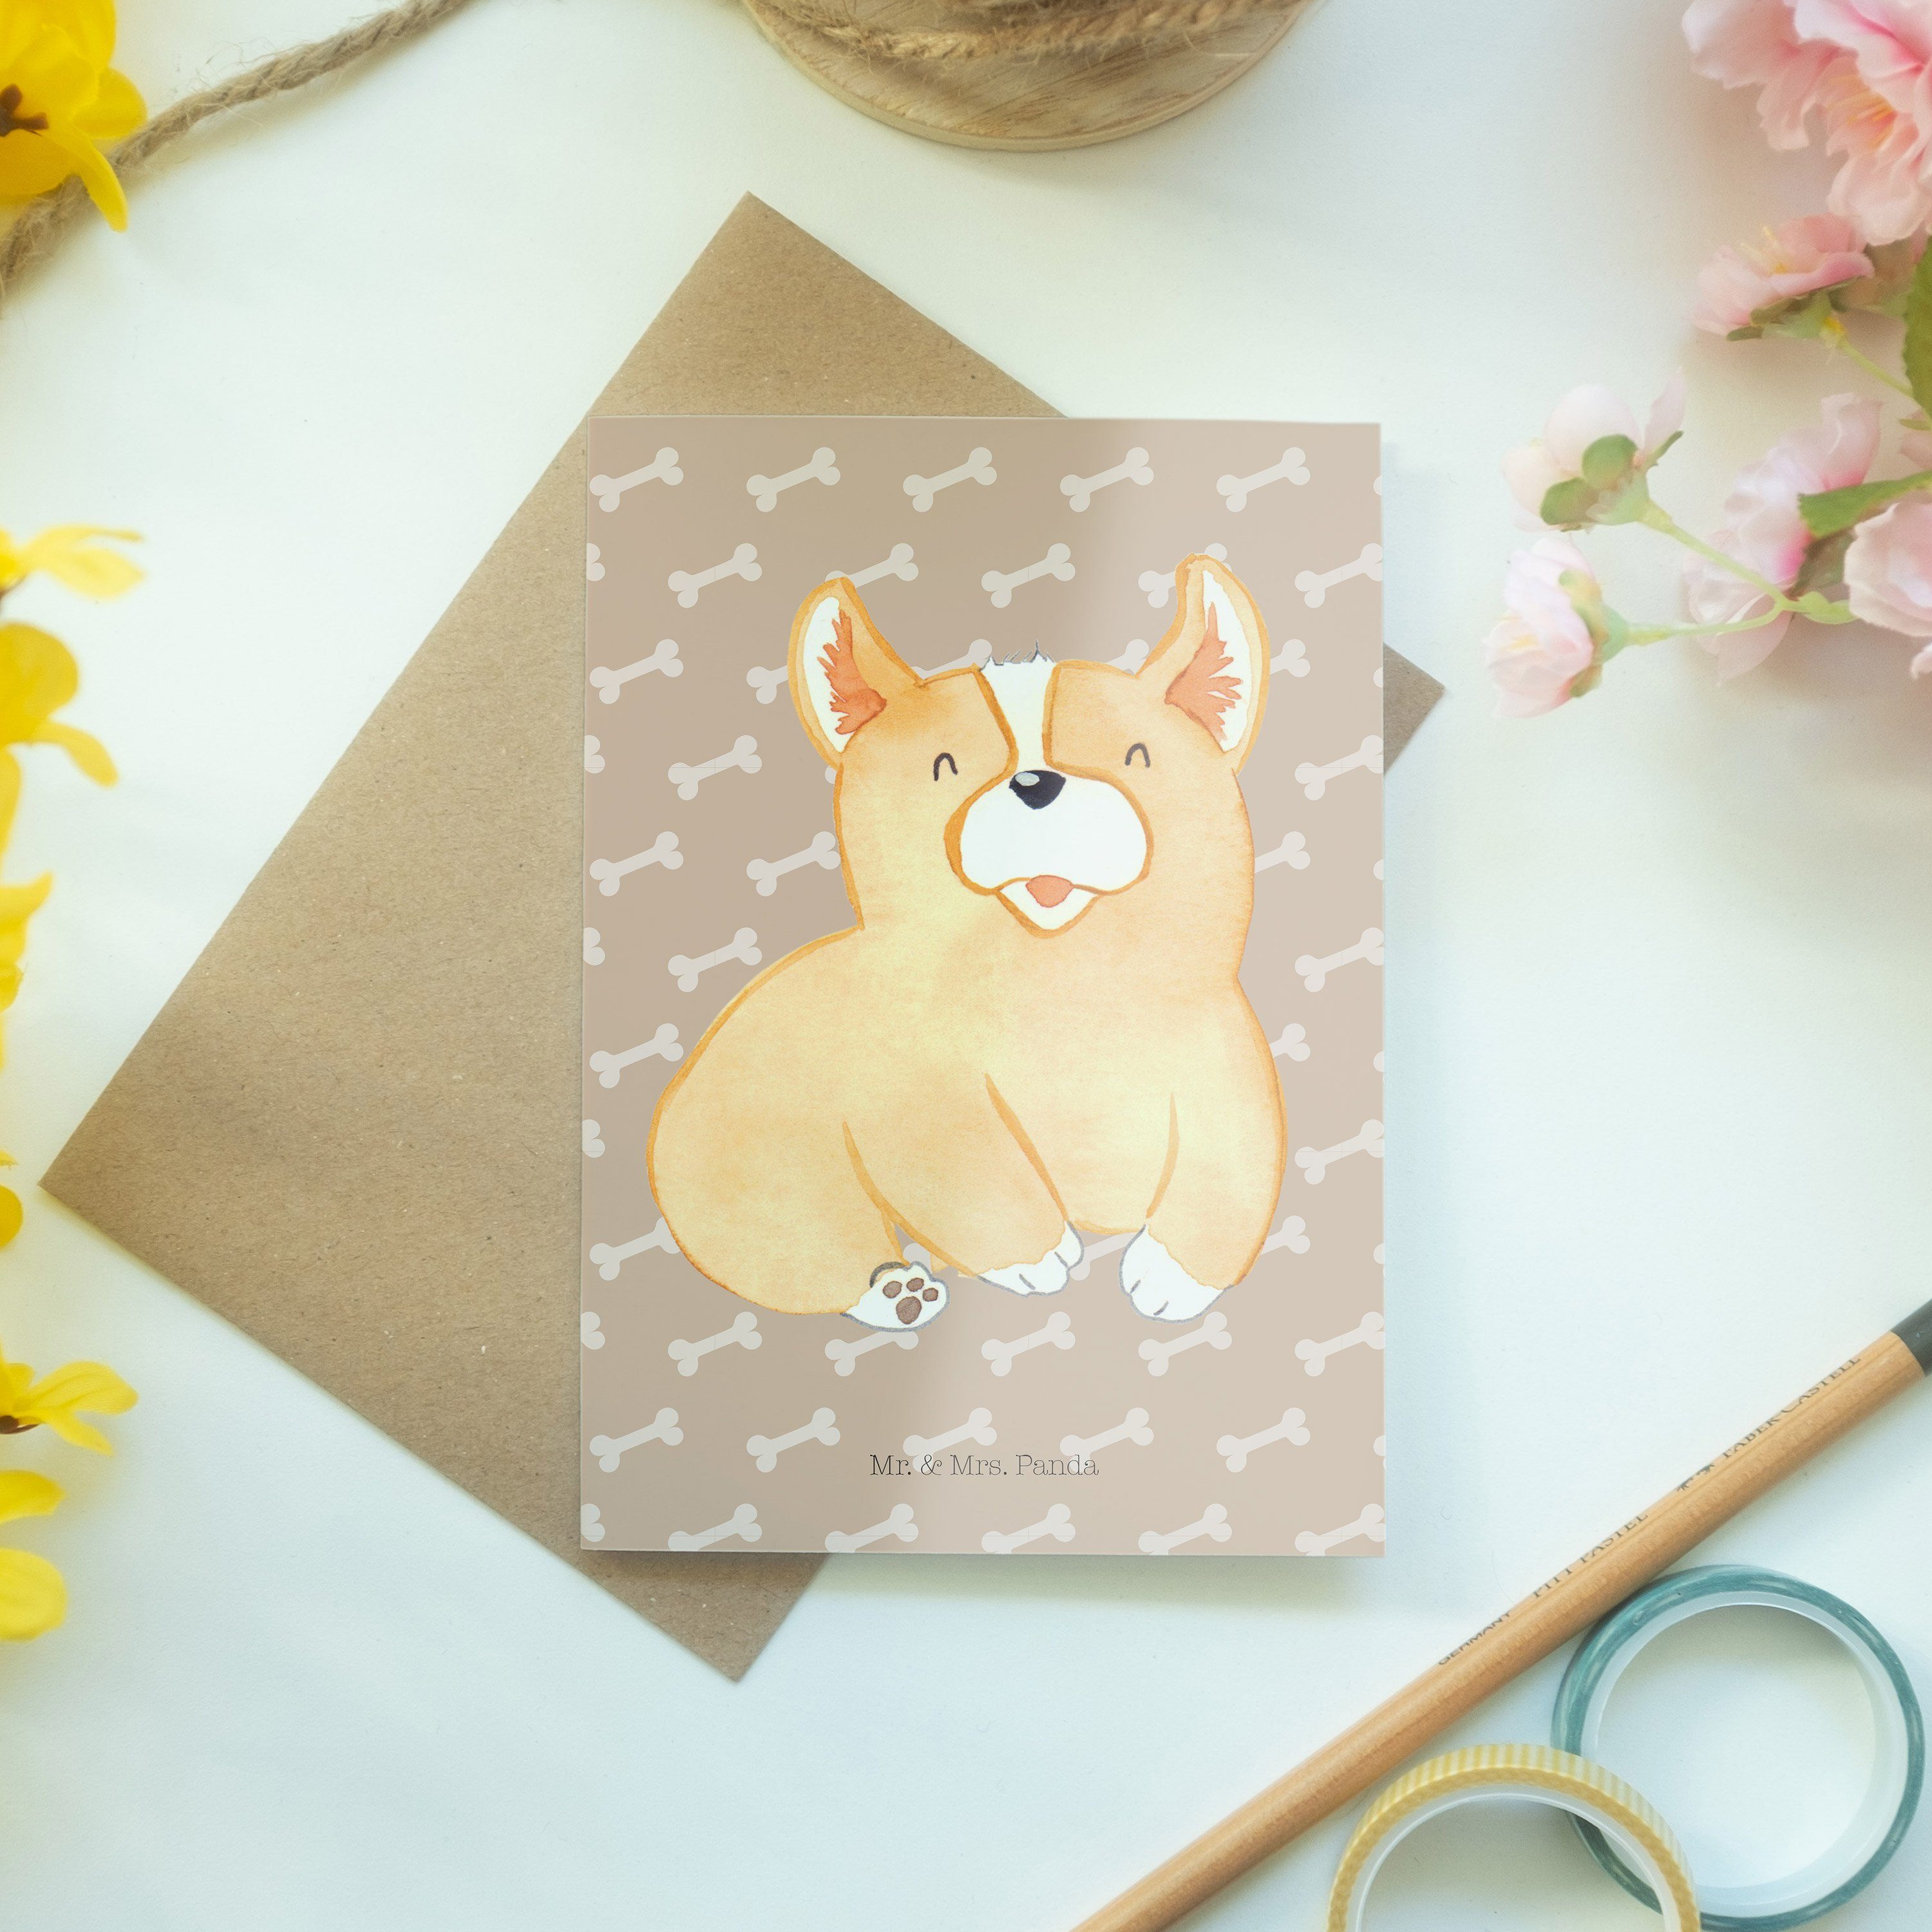 Mr. & Corgie - Hochzeitskarte, Hundeglück Panda Grußkarte Geschenk, Glü Geburtstagskarte, - Mrs